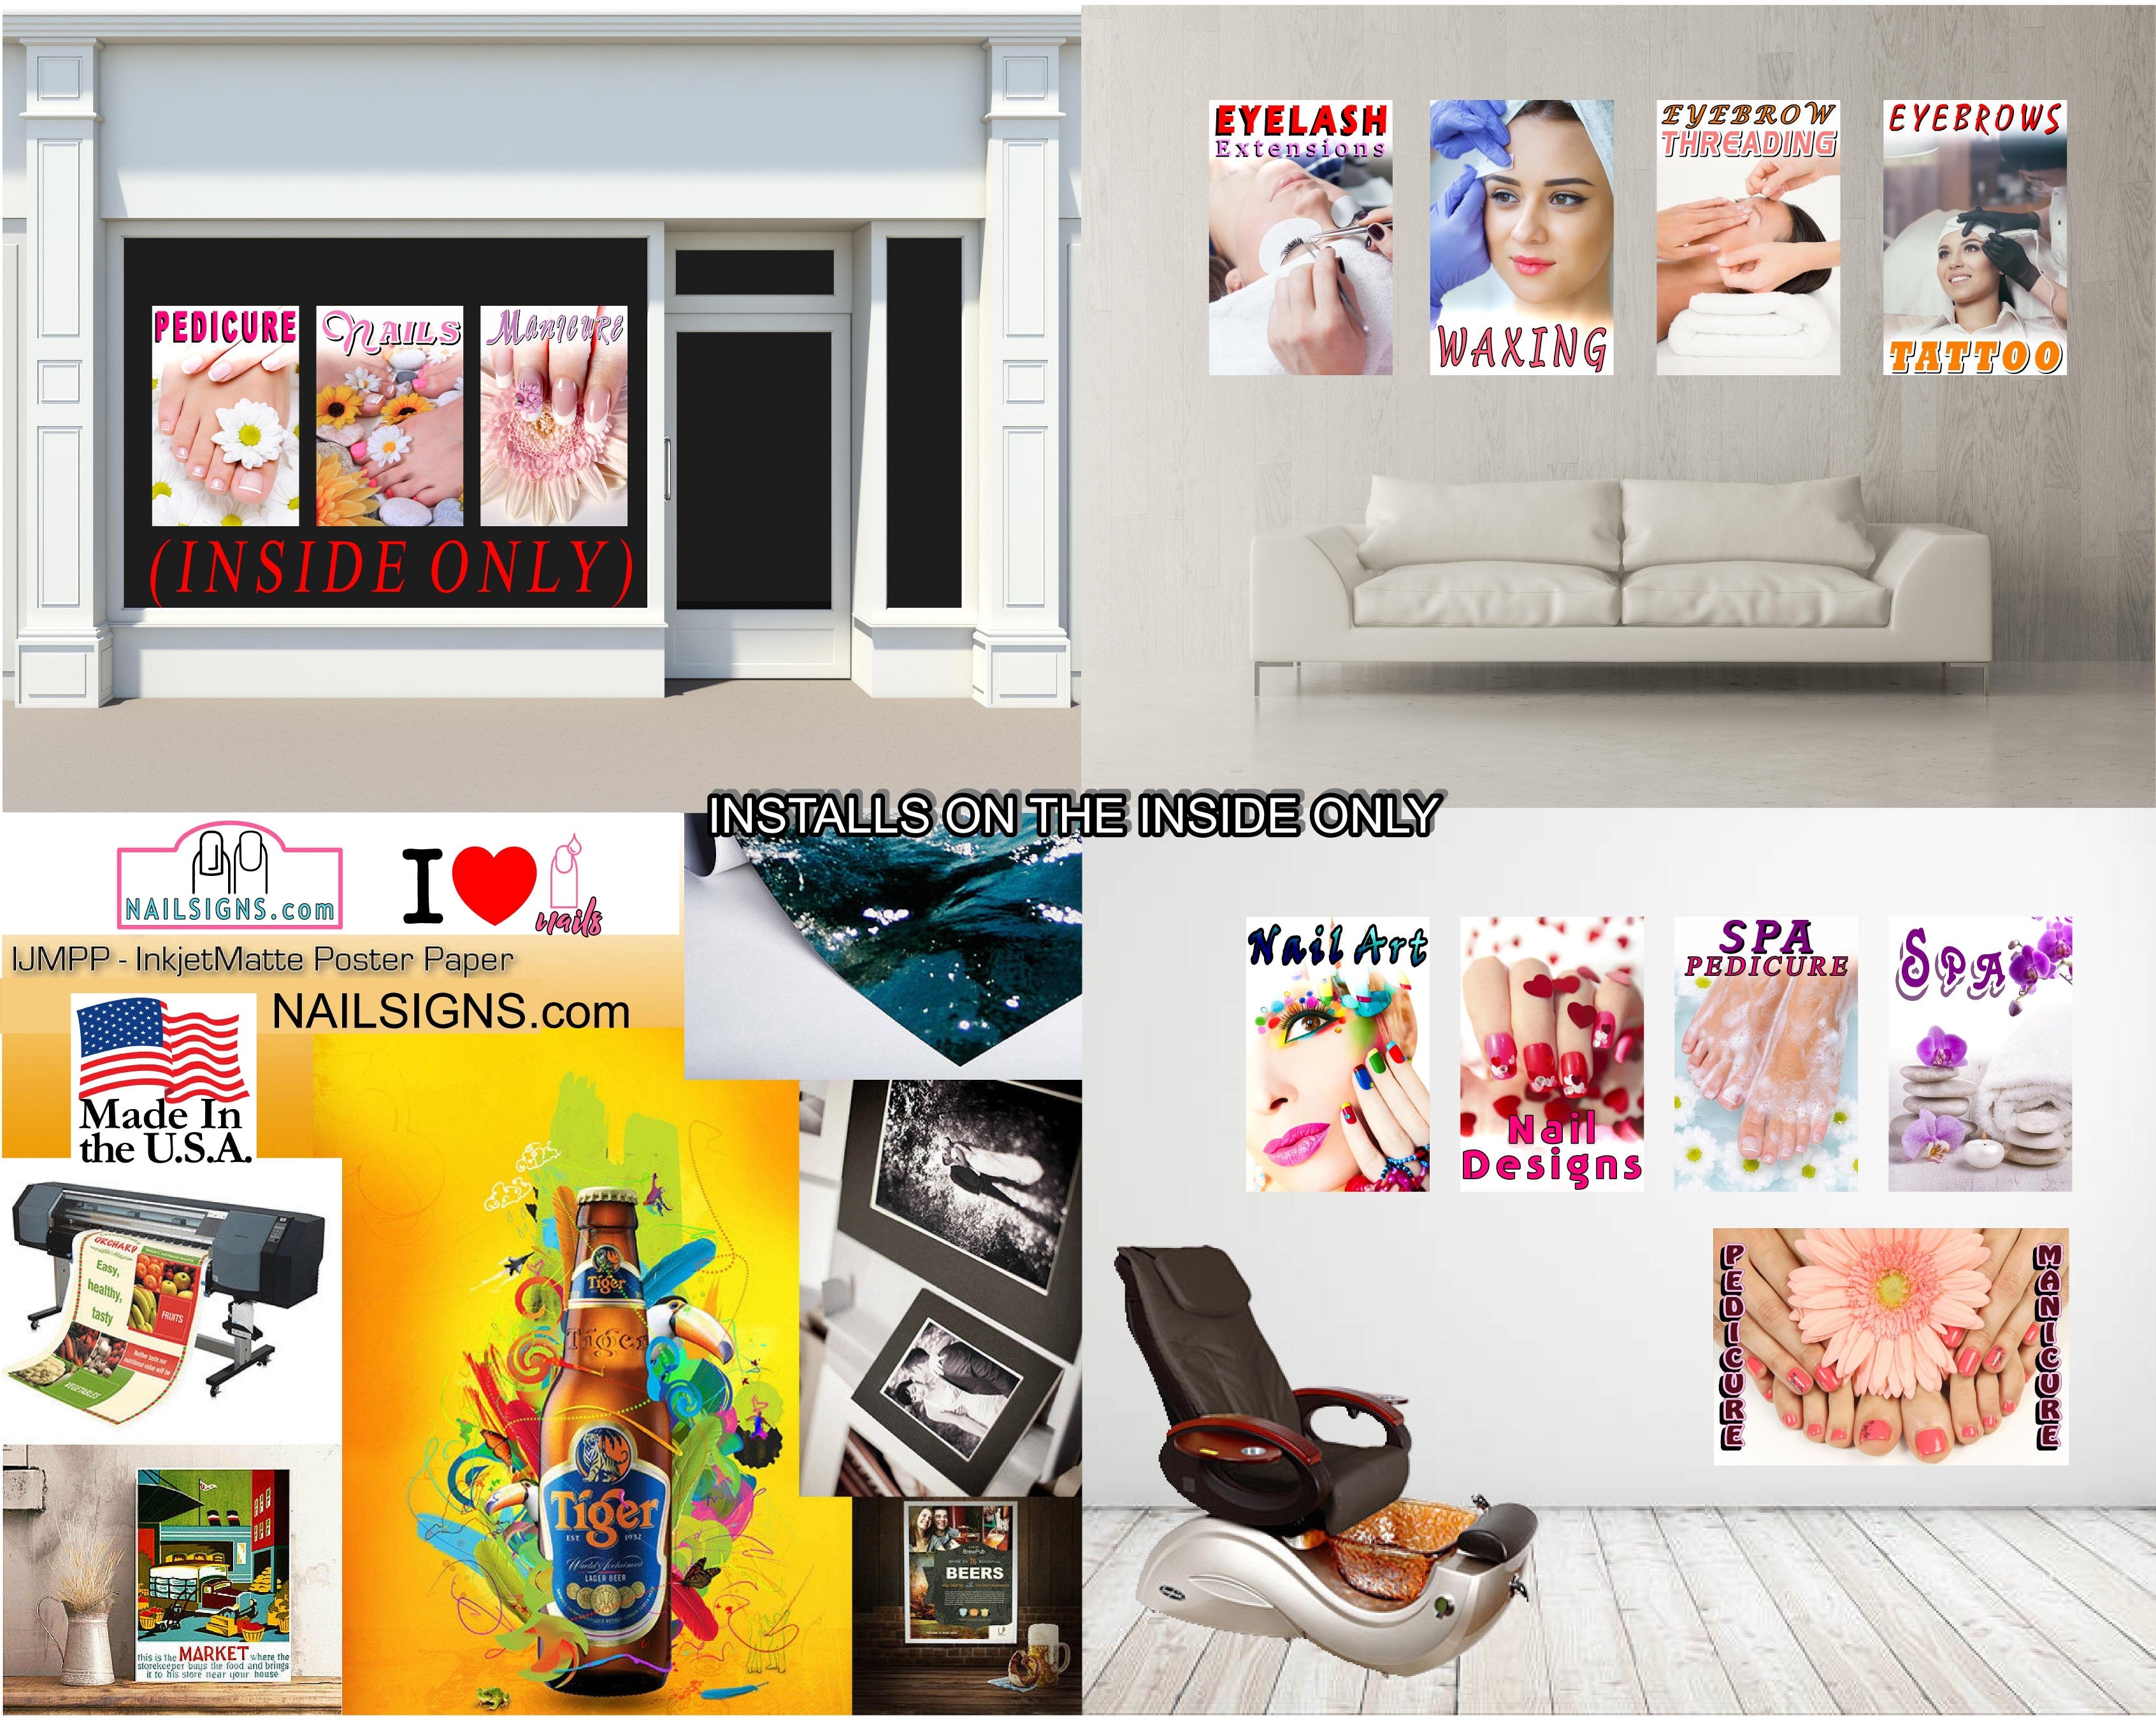 Pedicure 29 Photo-Realistic Paper Poster Premium Interior Inside Sign Advertising Marketing Wall Window Non-Laminated Horizontal